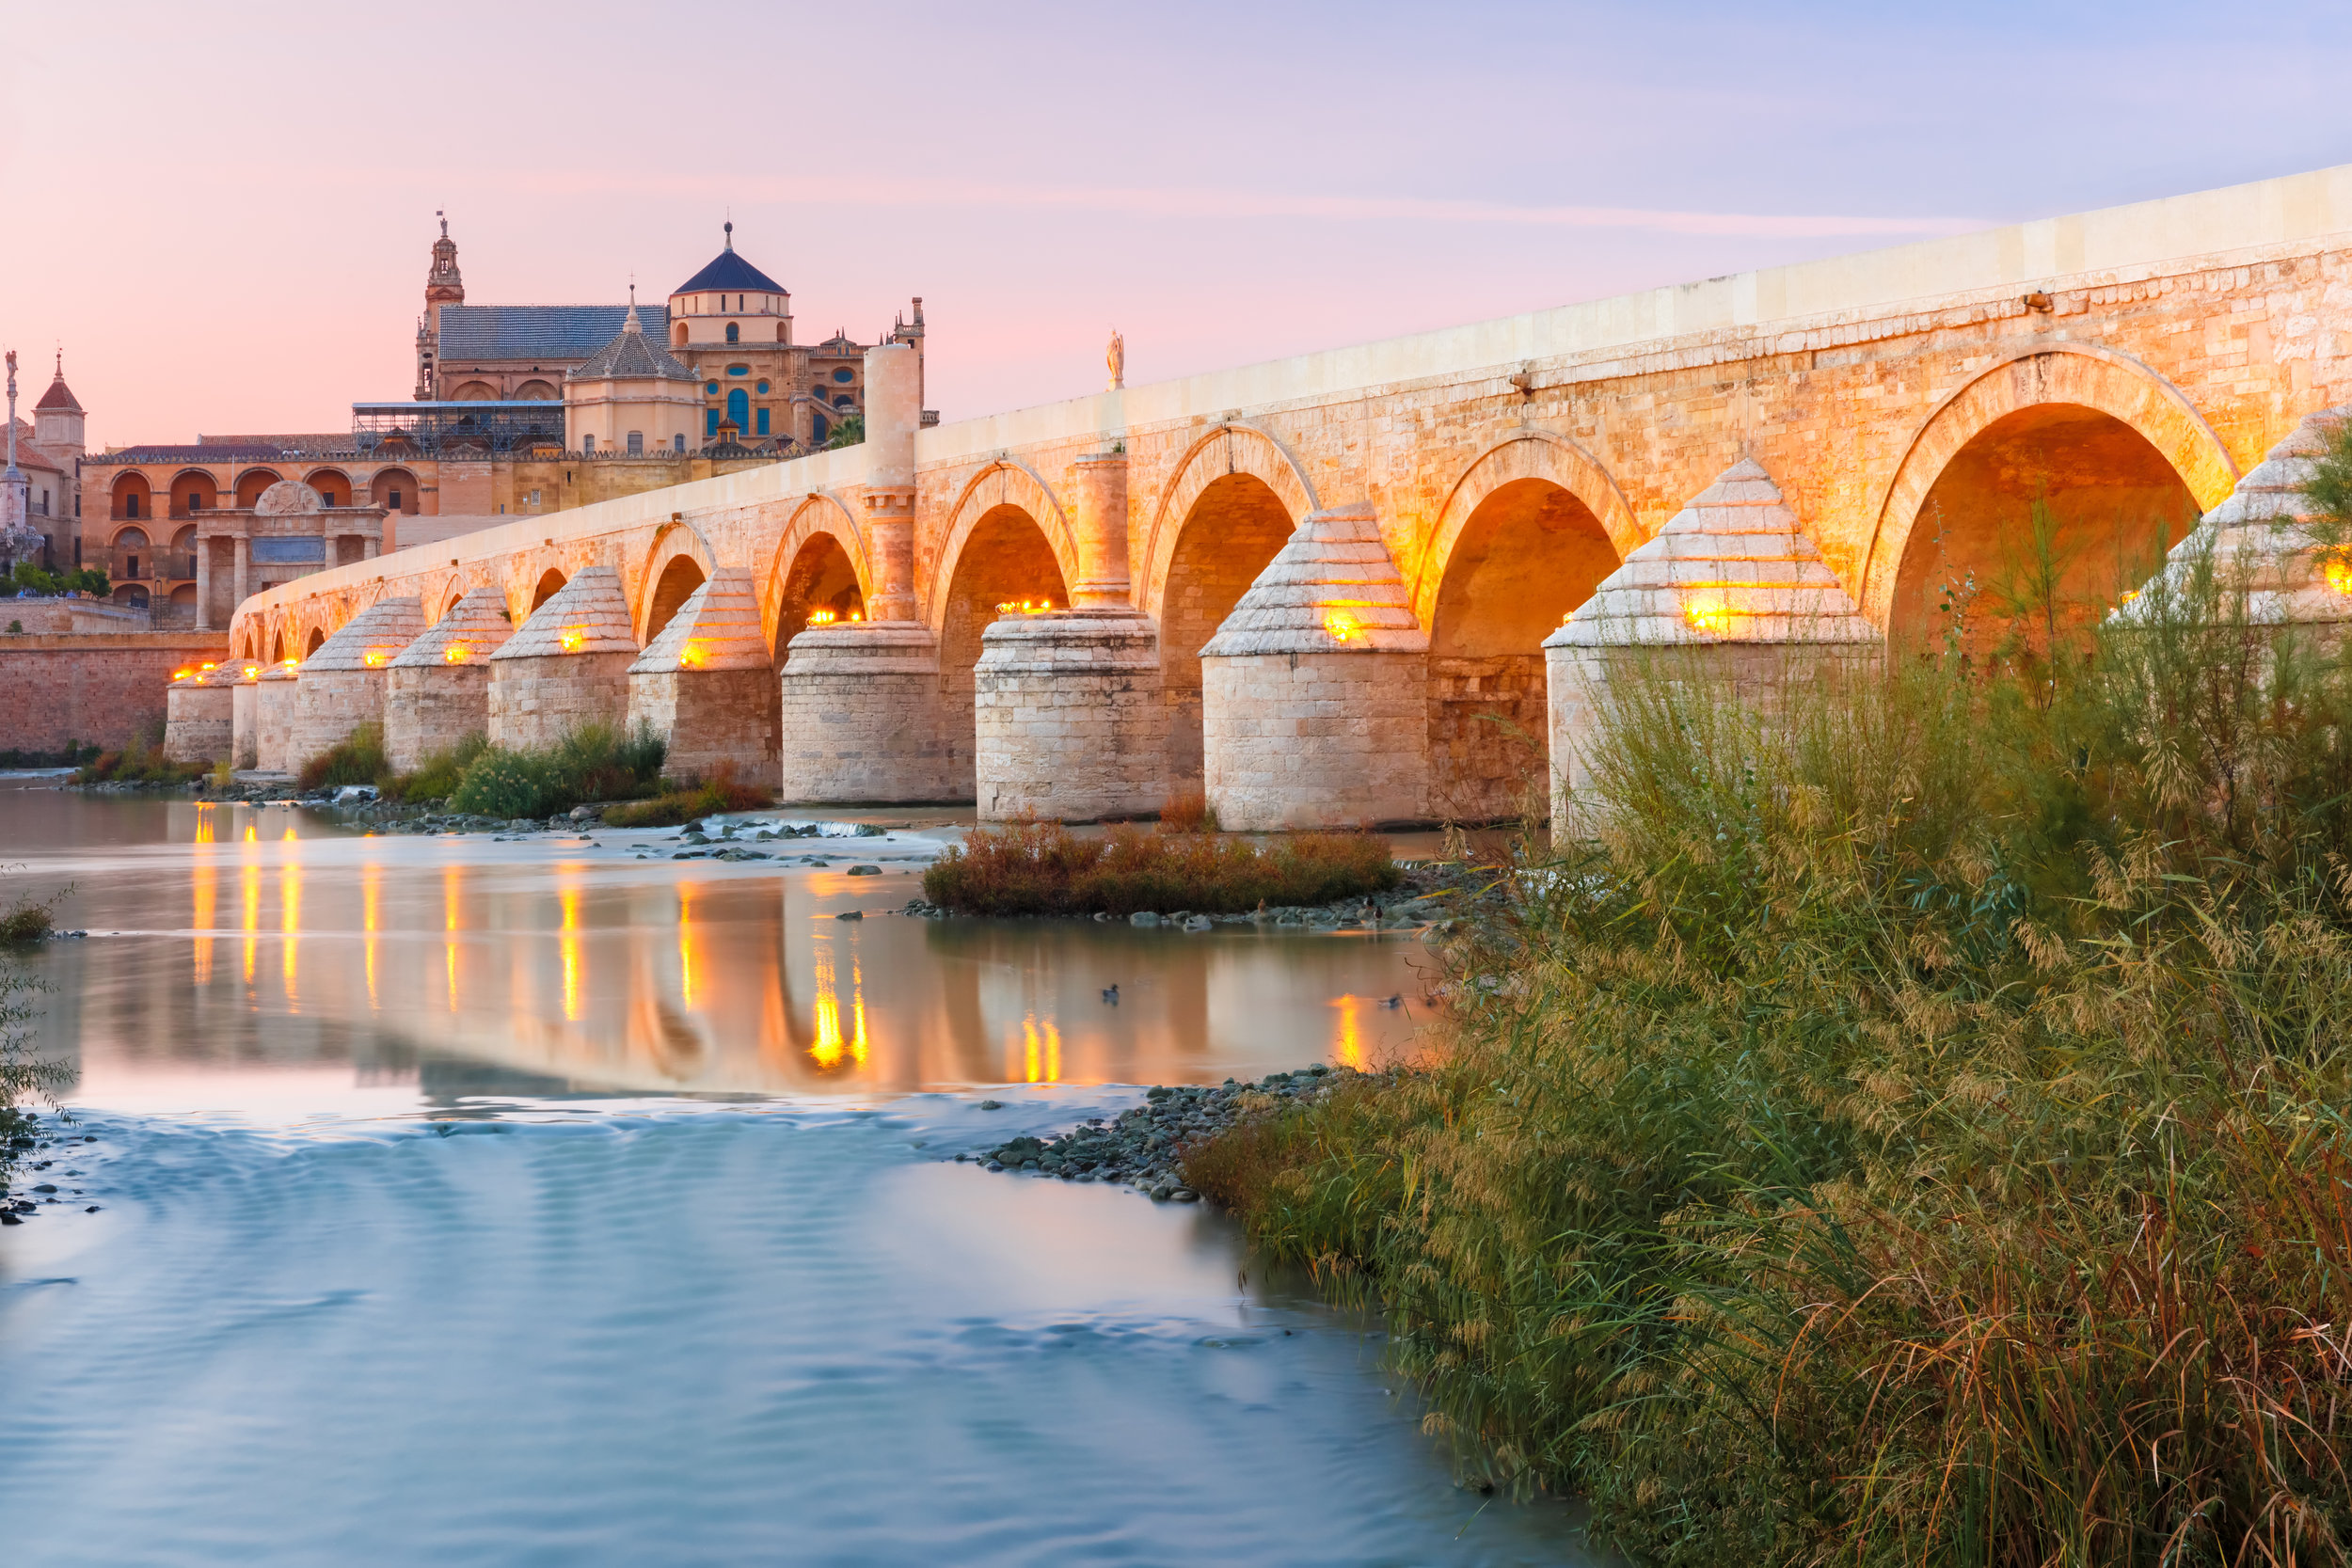 Mezquita-and-Roman-bridge-in-Cordoba,-Spain-626967064_5617x3745.jpeg